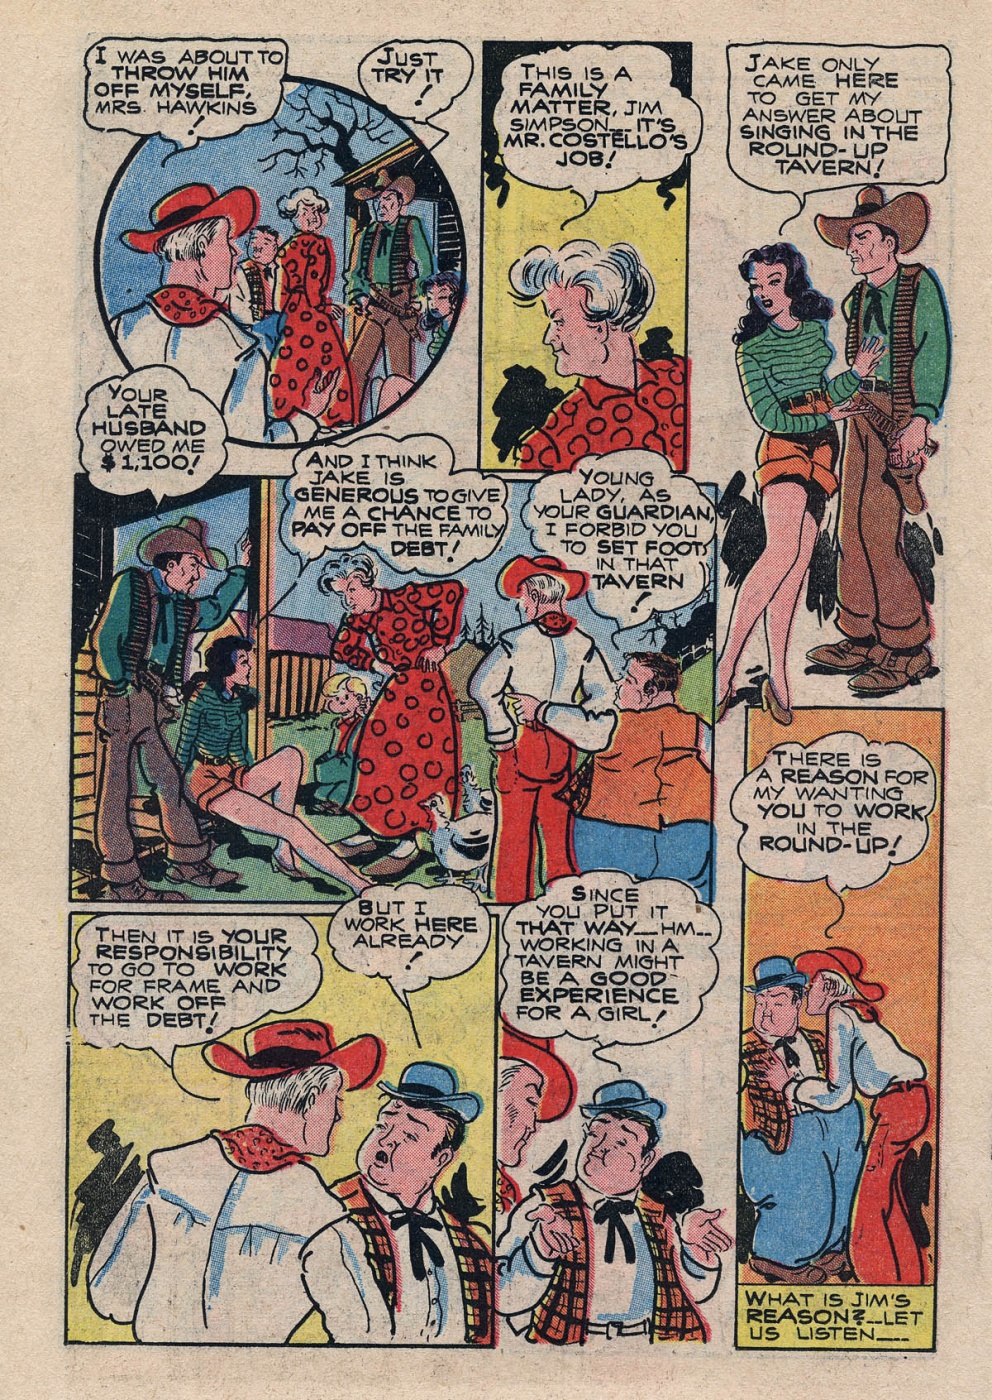 Funny Comic Strips - Abbott and Costello 001 (Feb 1948) 26